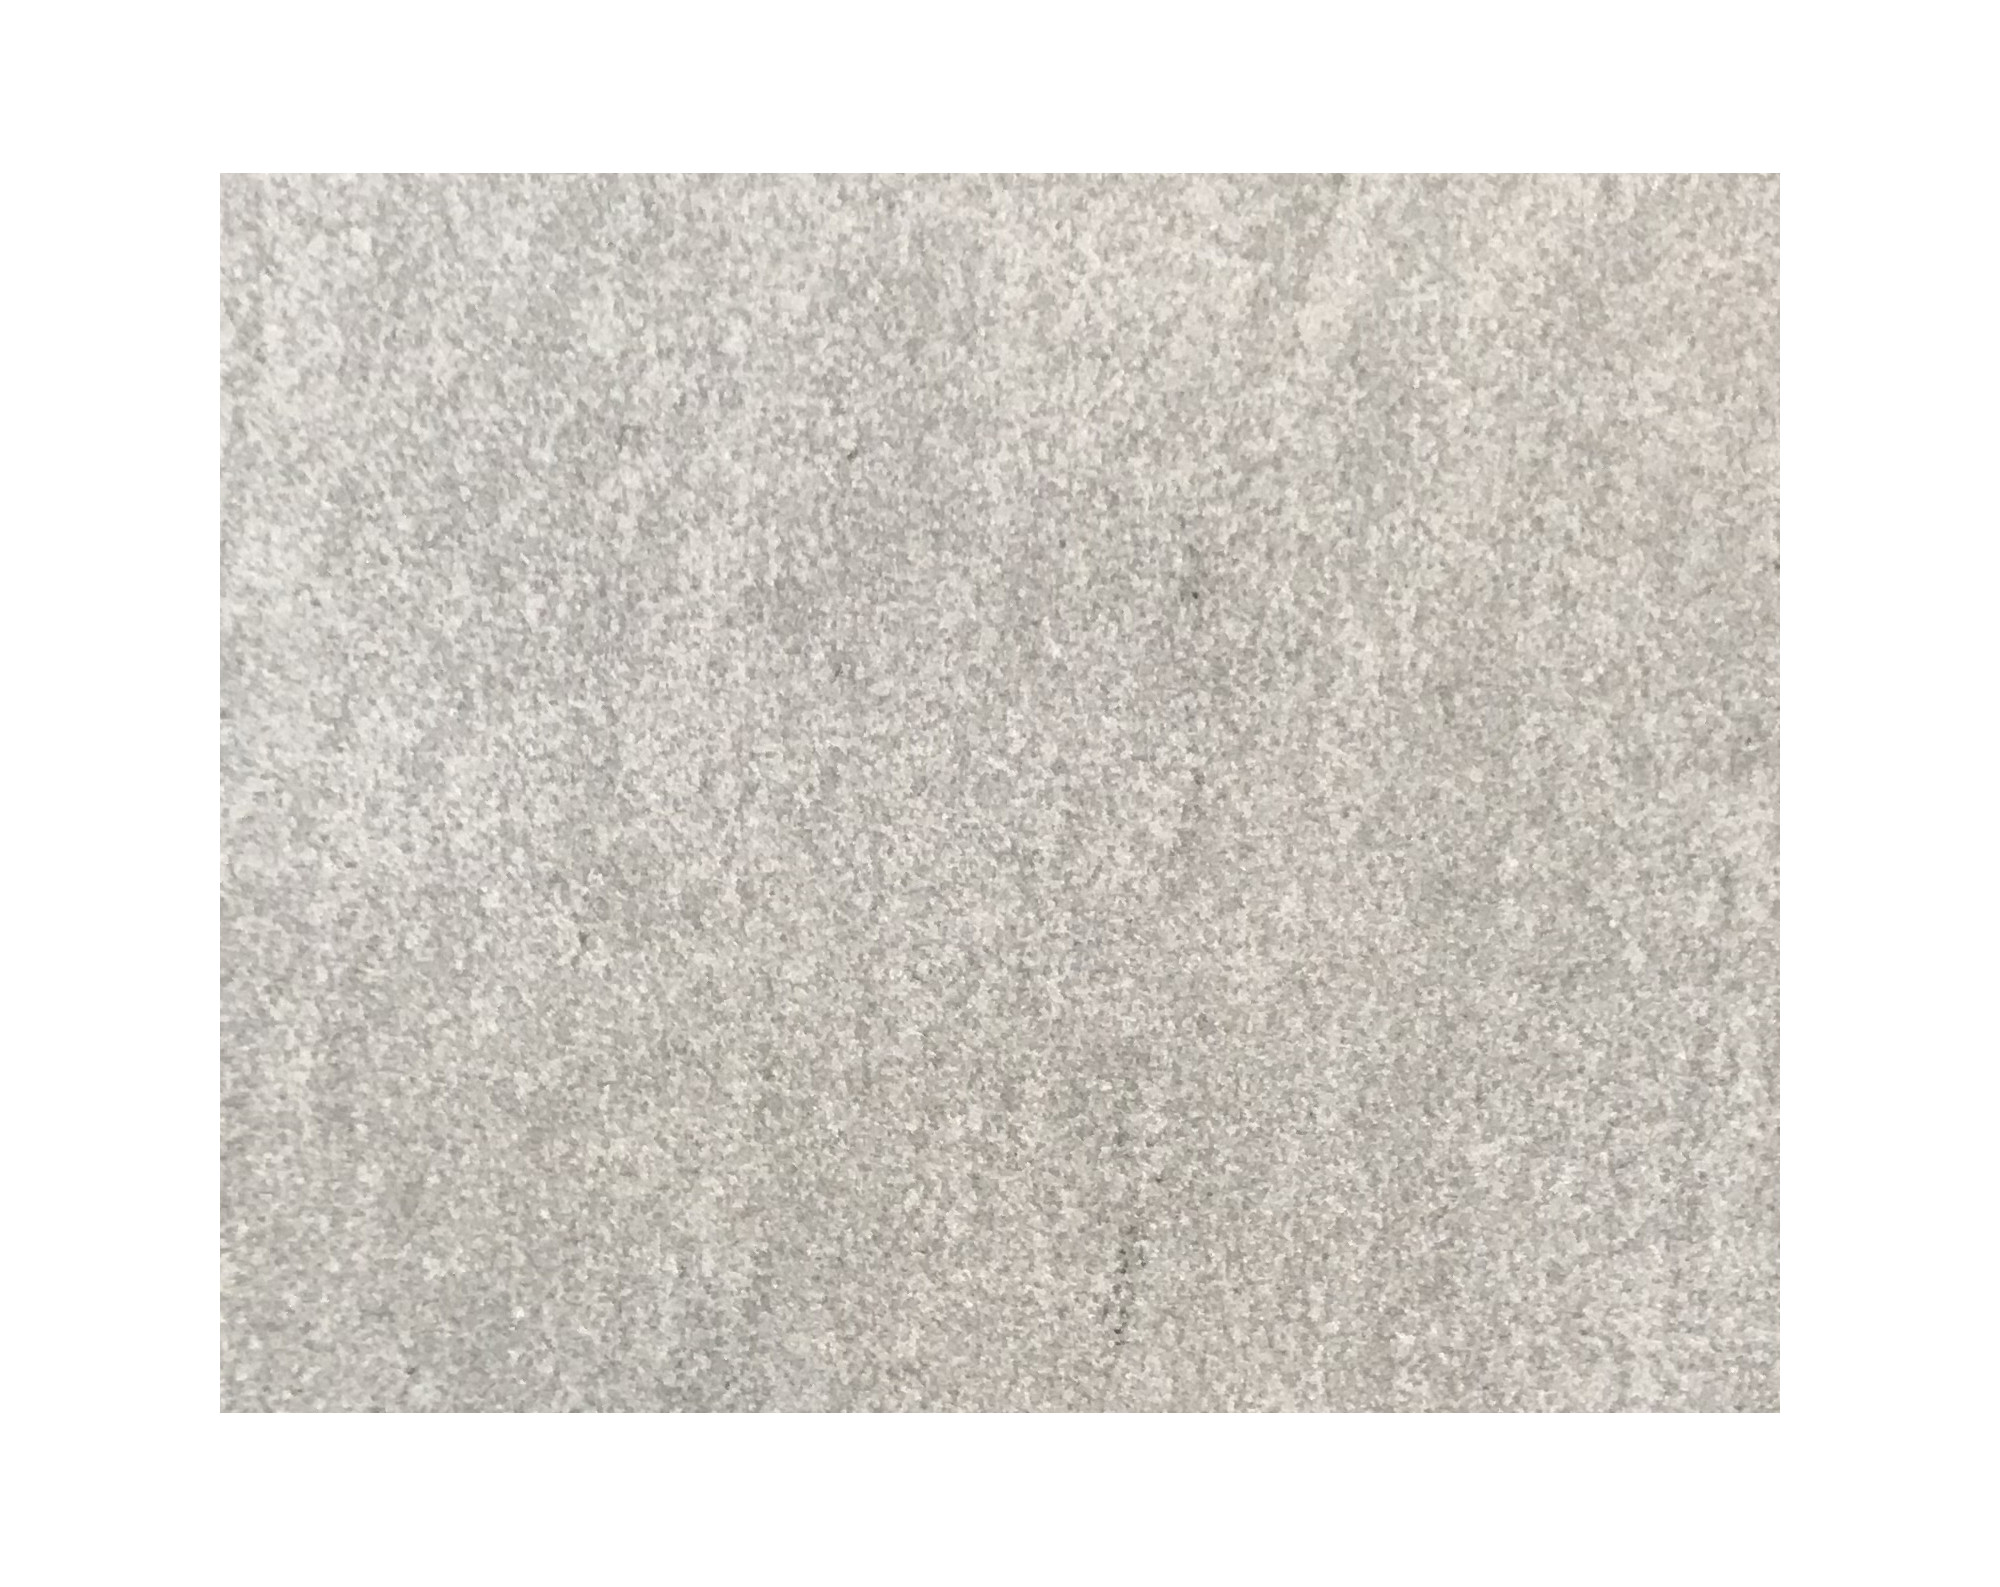 Harmo roc maranelloset, keramiek-serie, 8-vormig d:4,60mx7,25m, zand grijs, keramisch porselein